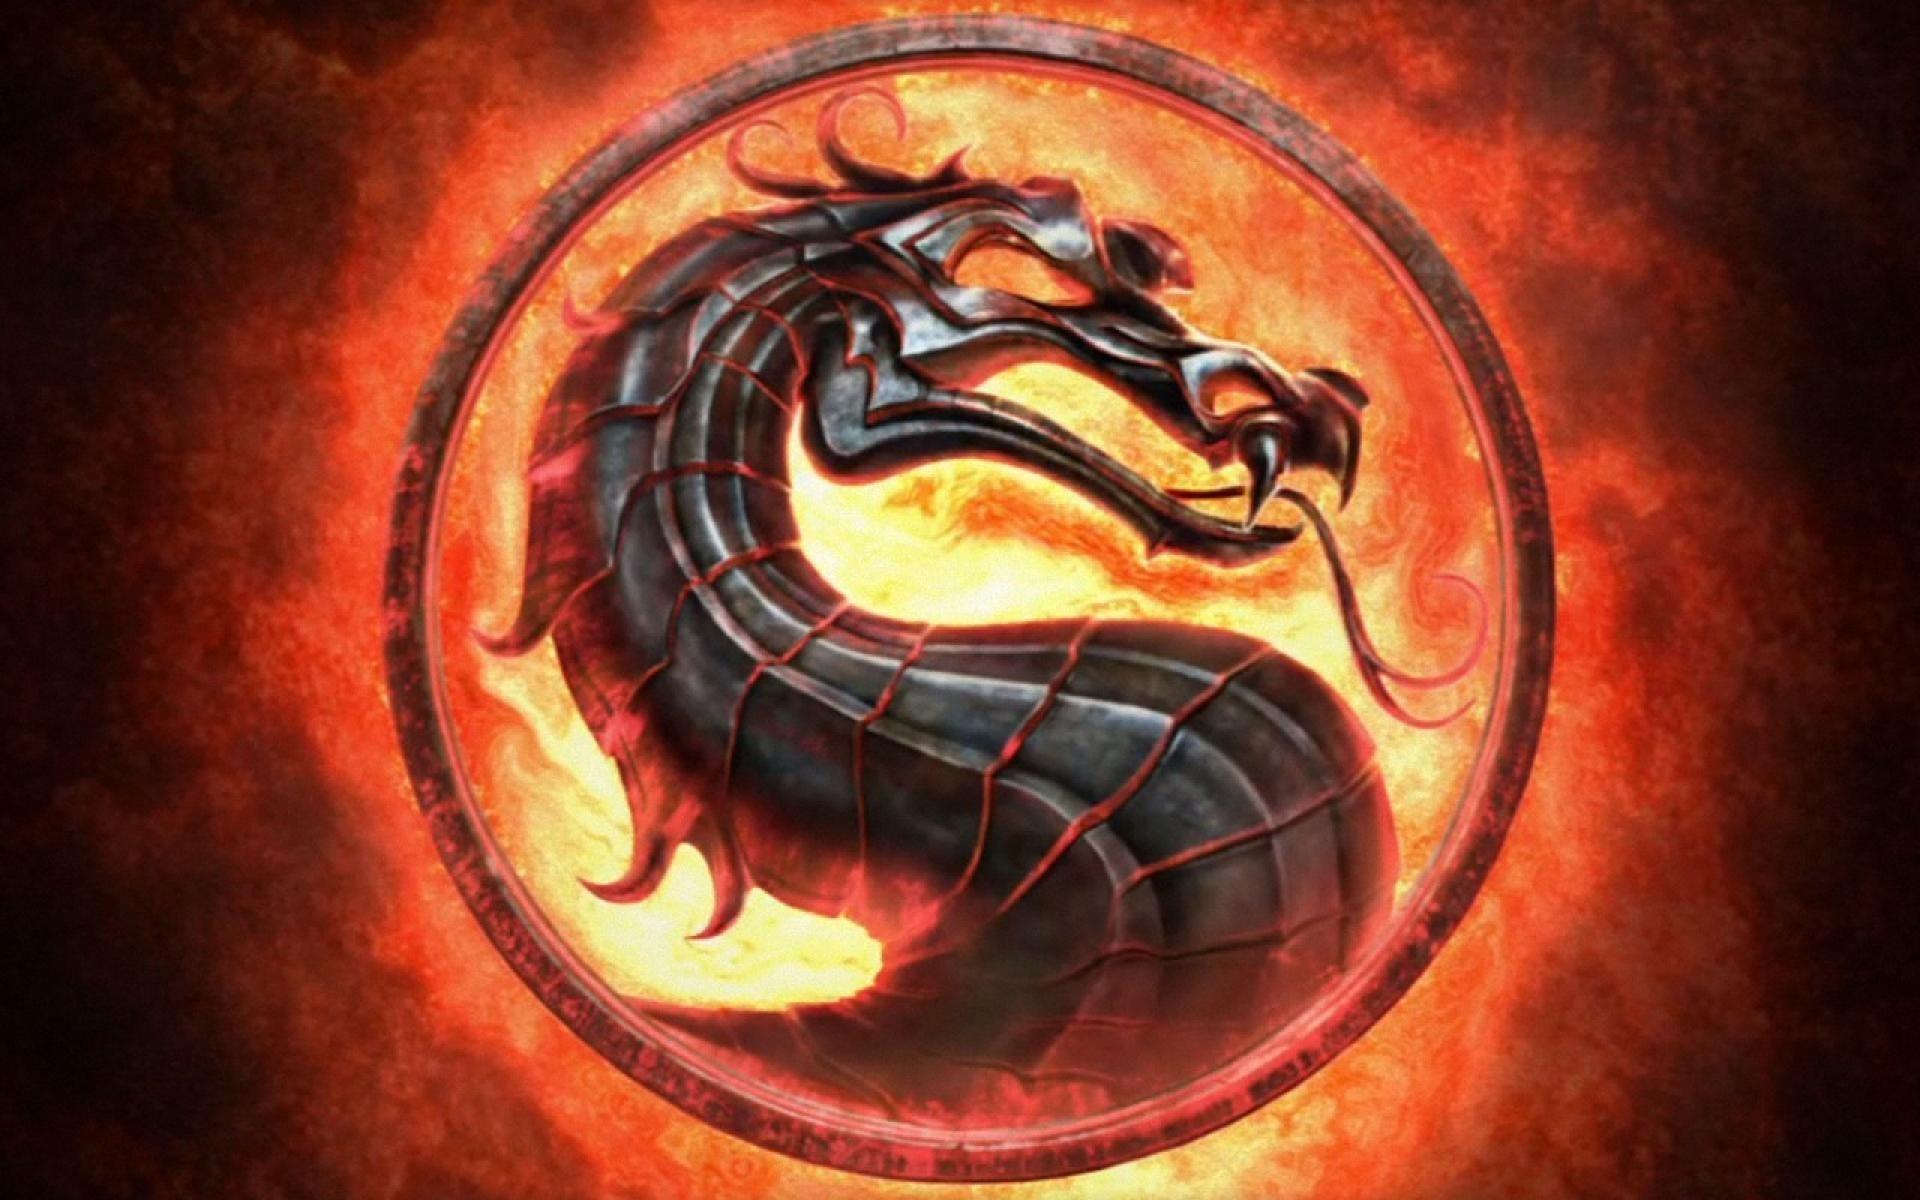 orange dragon logo